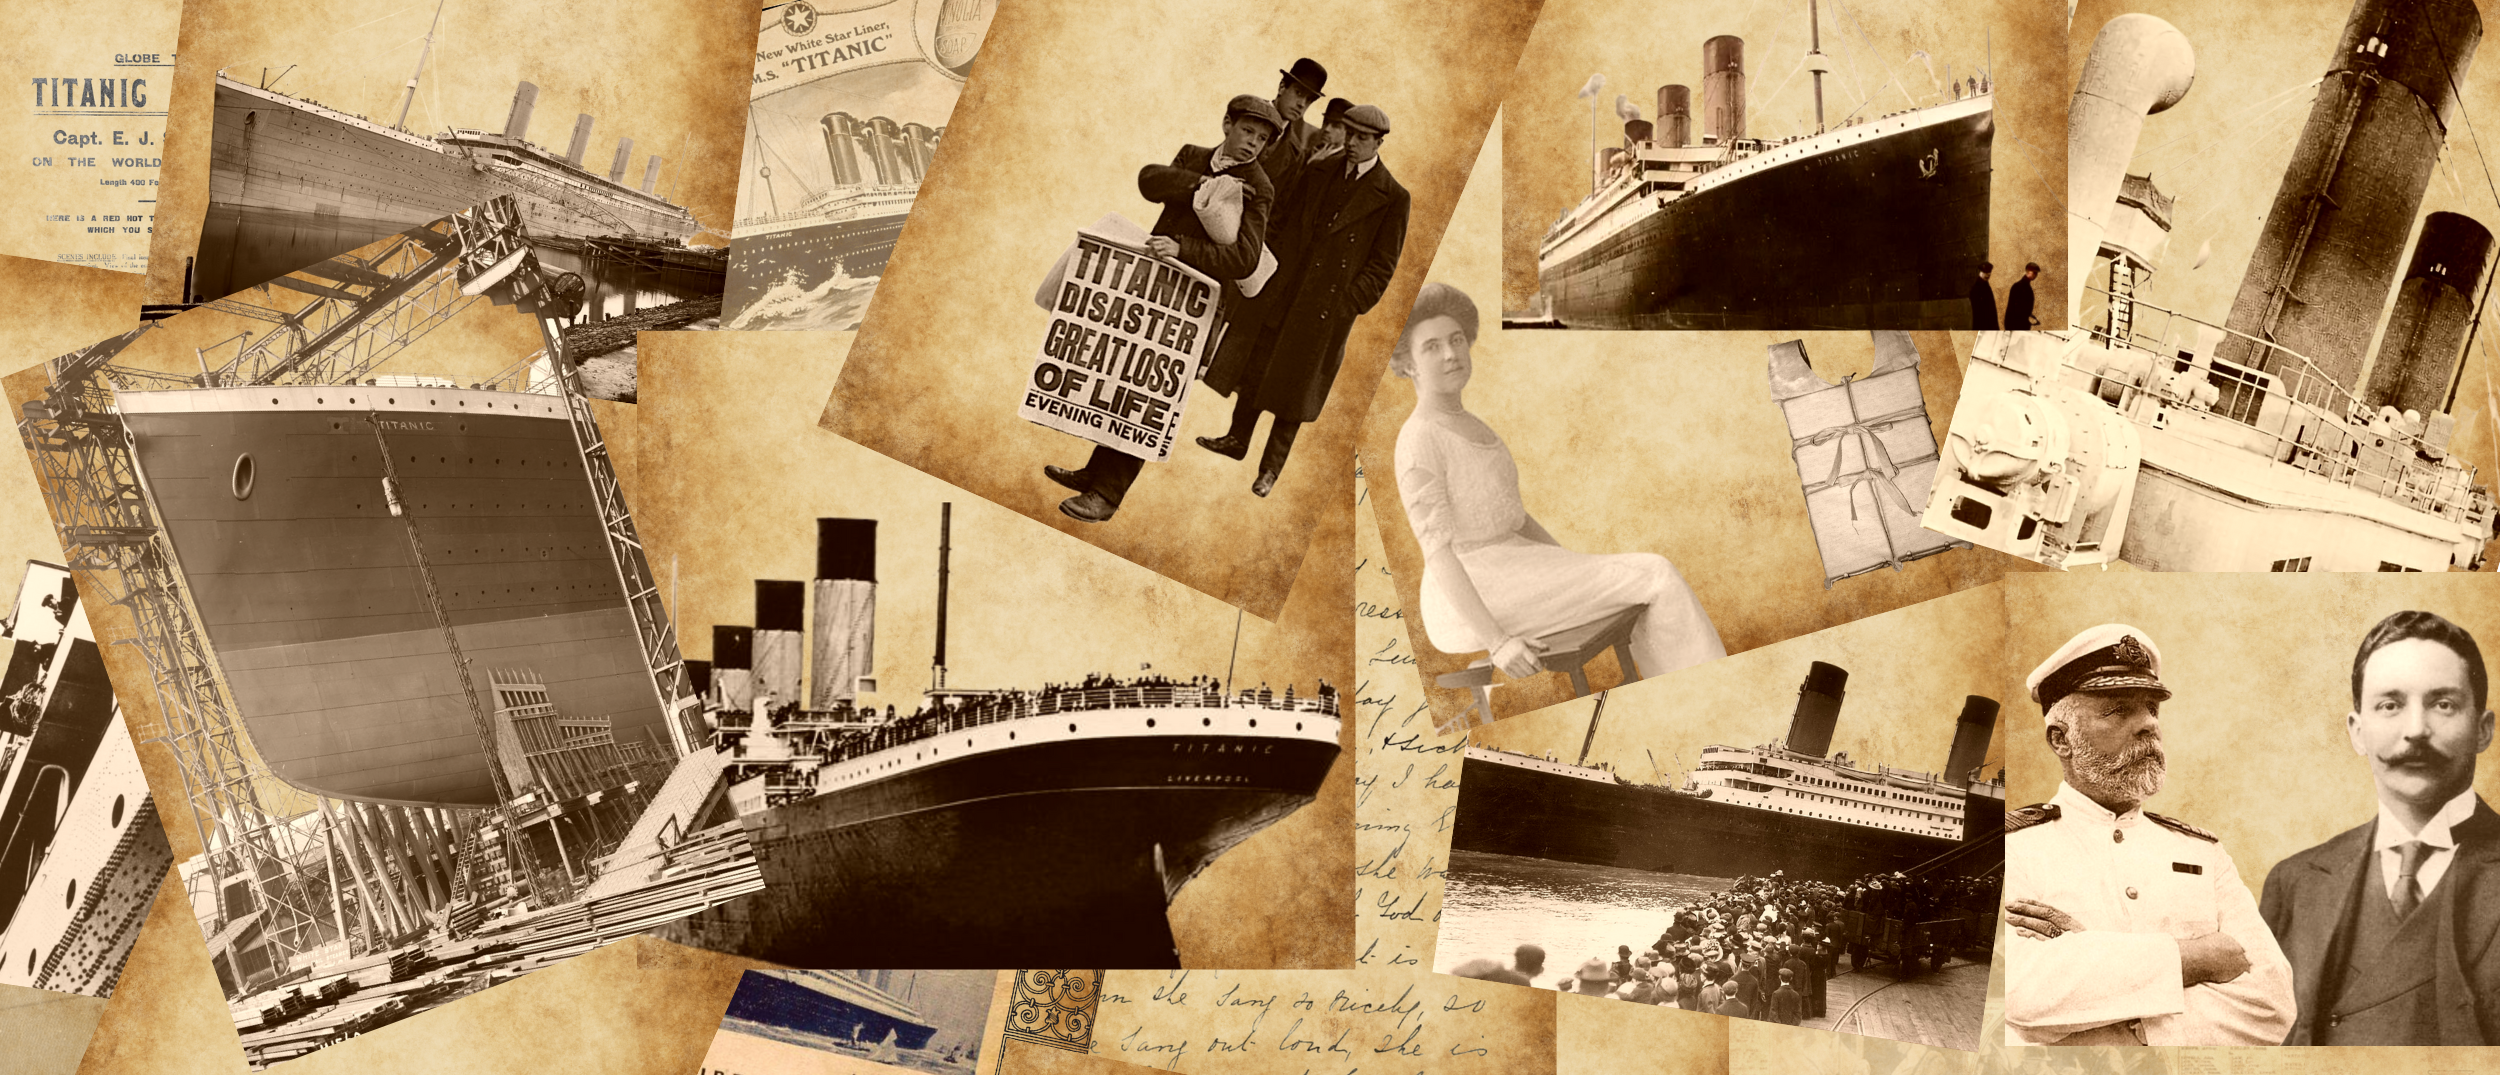 Titanic Journal